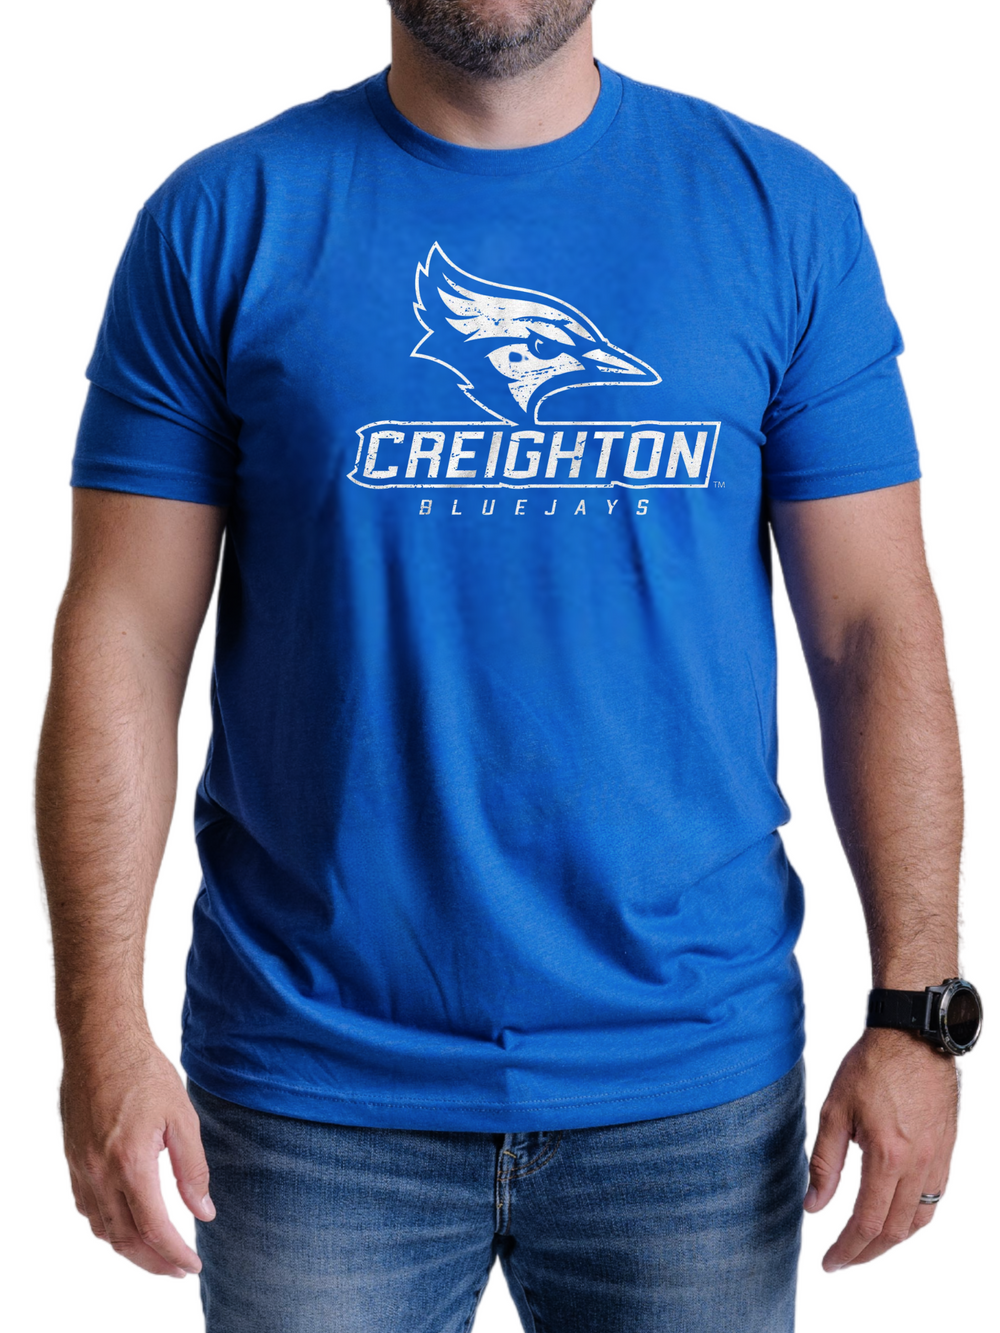 Creighton University Bluejays Wordmark T-Shirt (Royal Blue) on male model